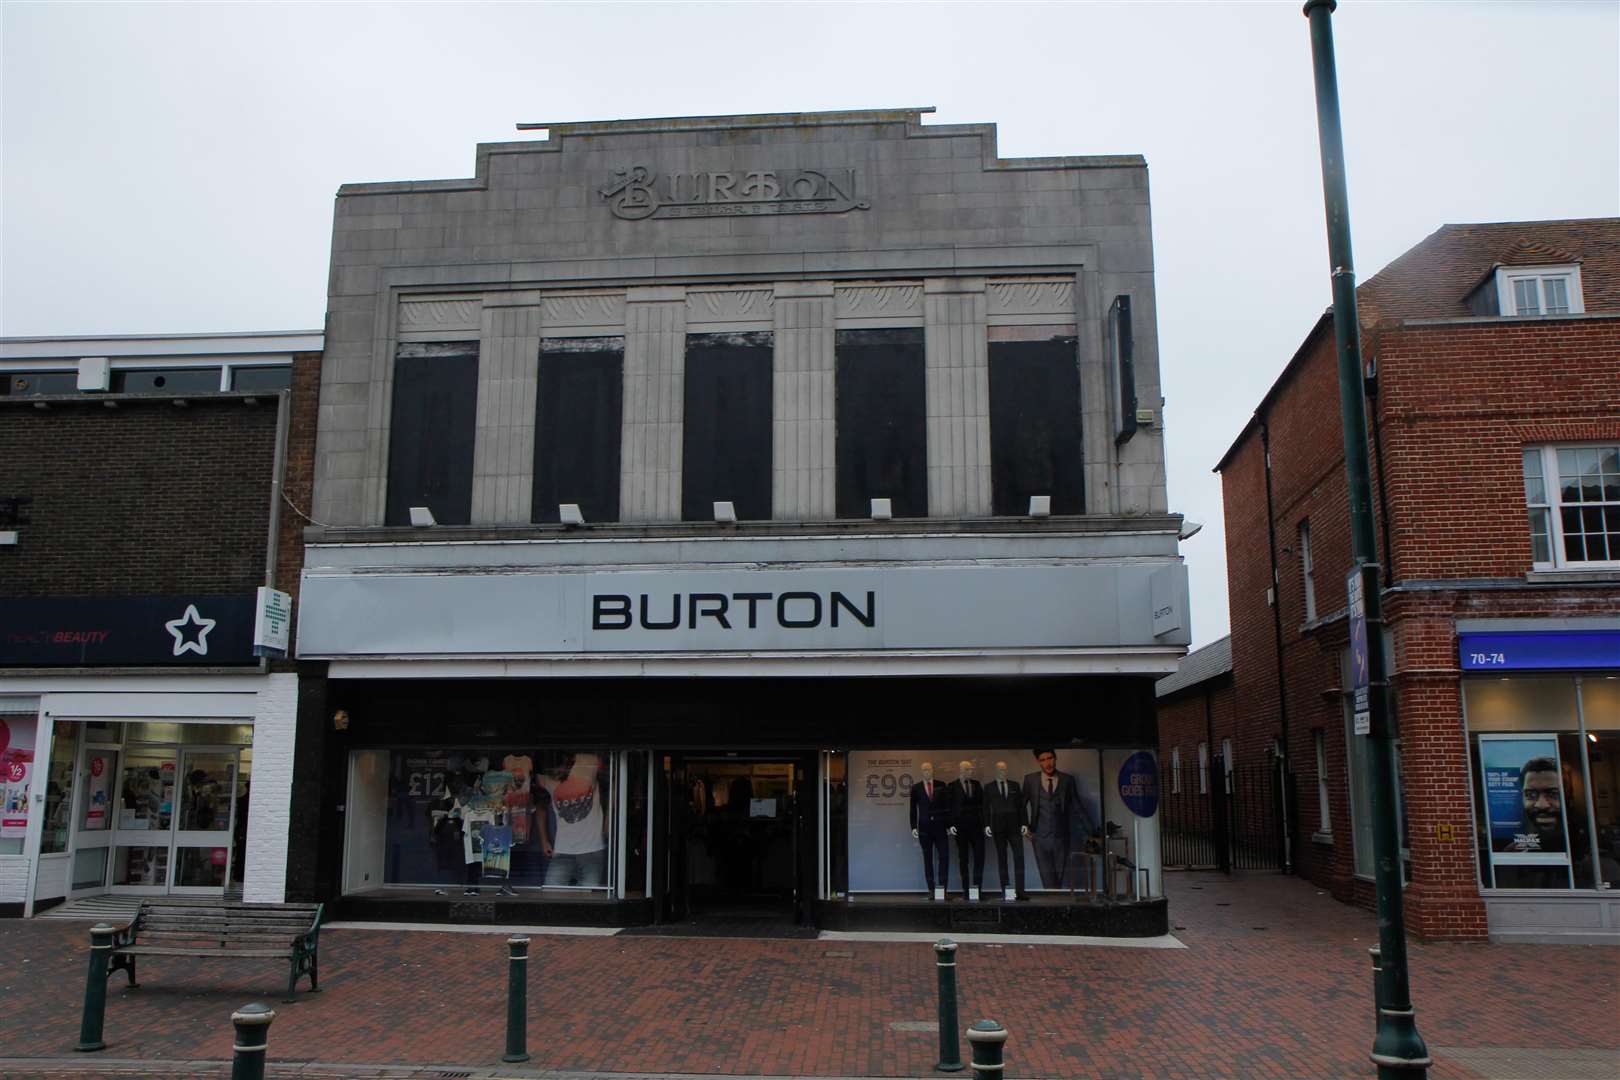 Life nightclub is above Burton in Sittingbourne. Picture: Darren Small